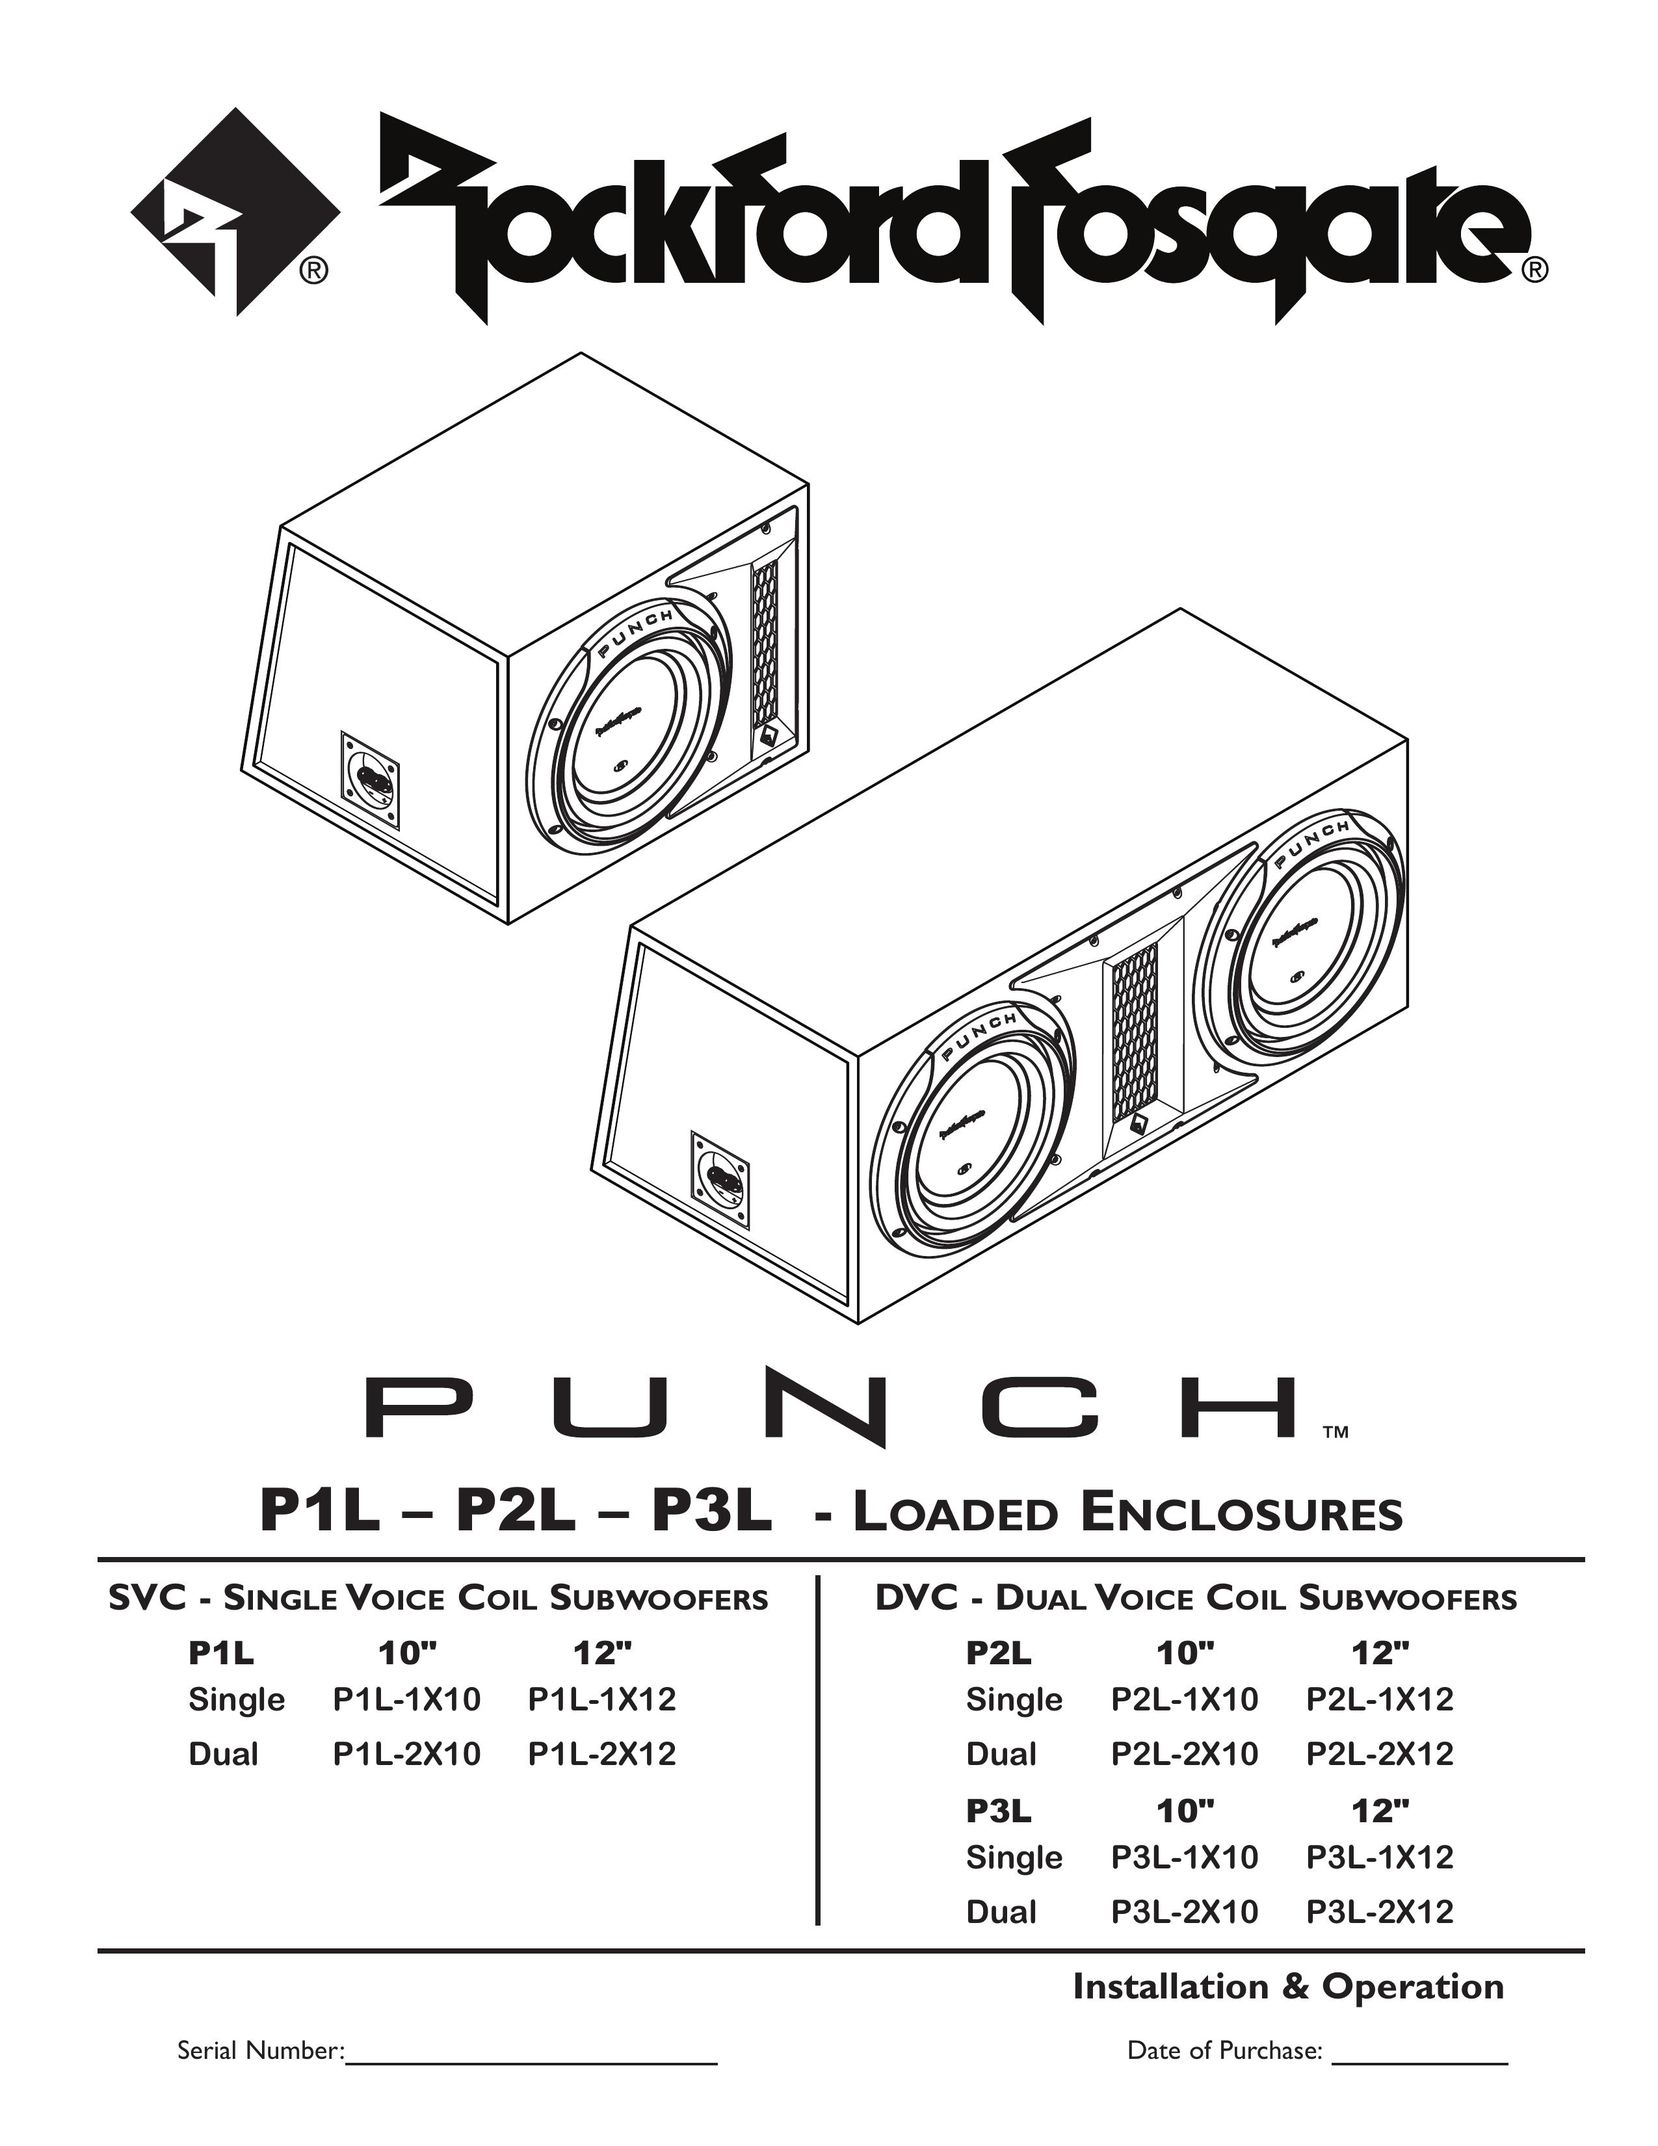 Rockford Fosgate P1L-2X12 Speaker User Manual